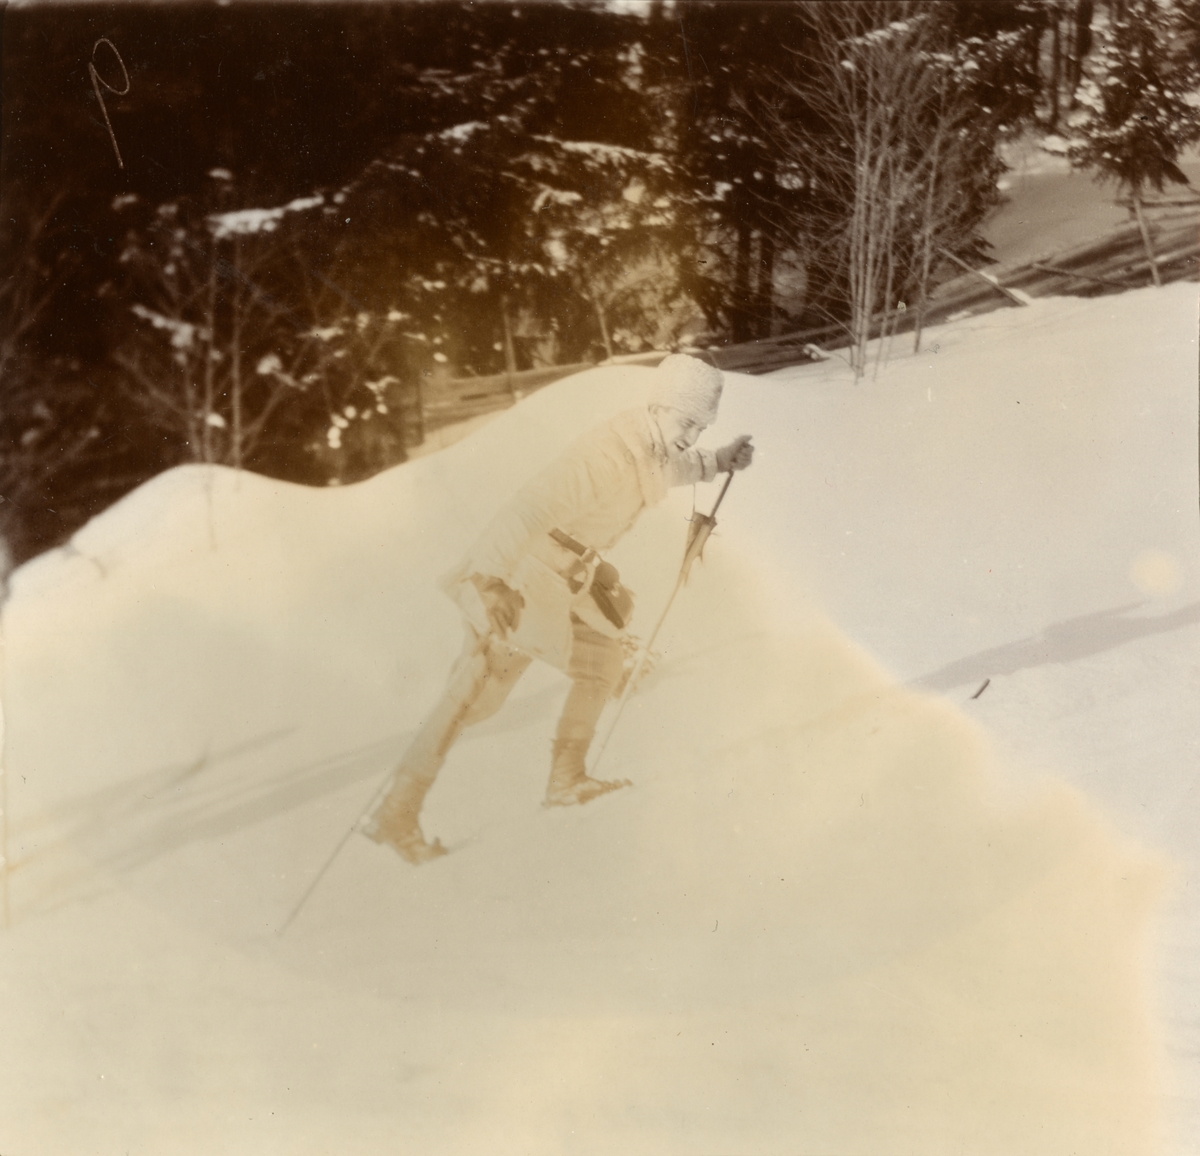 Text i fotoalbum: "Norrland 1916 febr. Sollefteå. Resoff på vinterutb, 3 veckor. Ljt Holmquist".